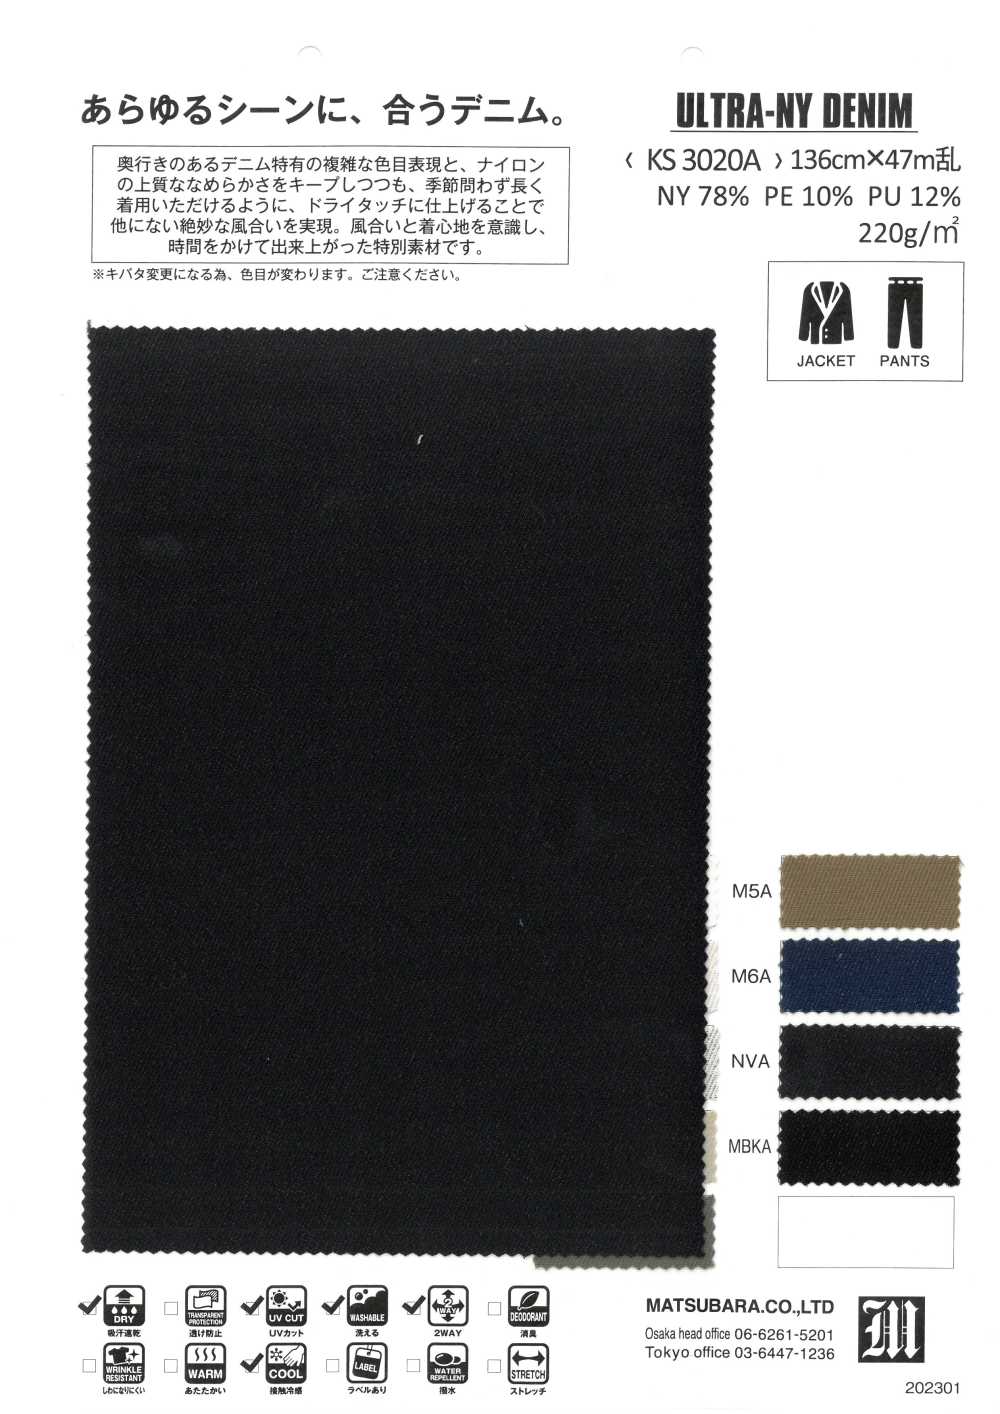 KS3020A [Textile / Fabric] Matsubara